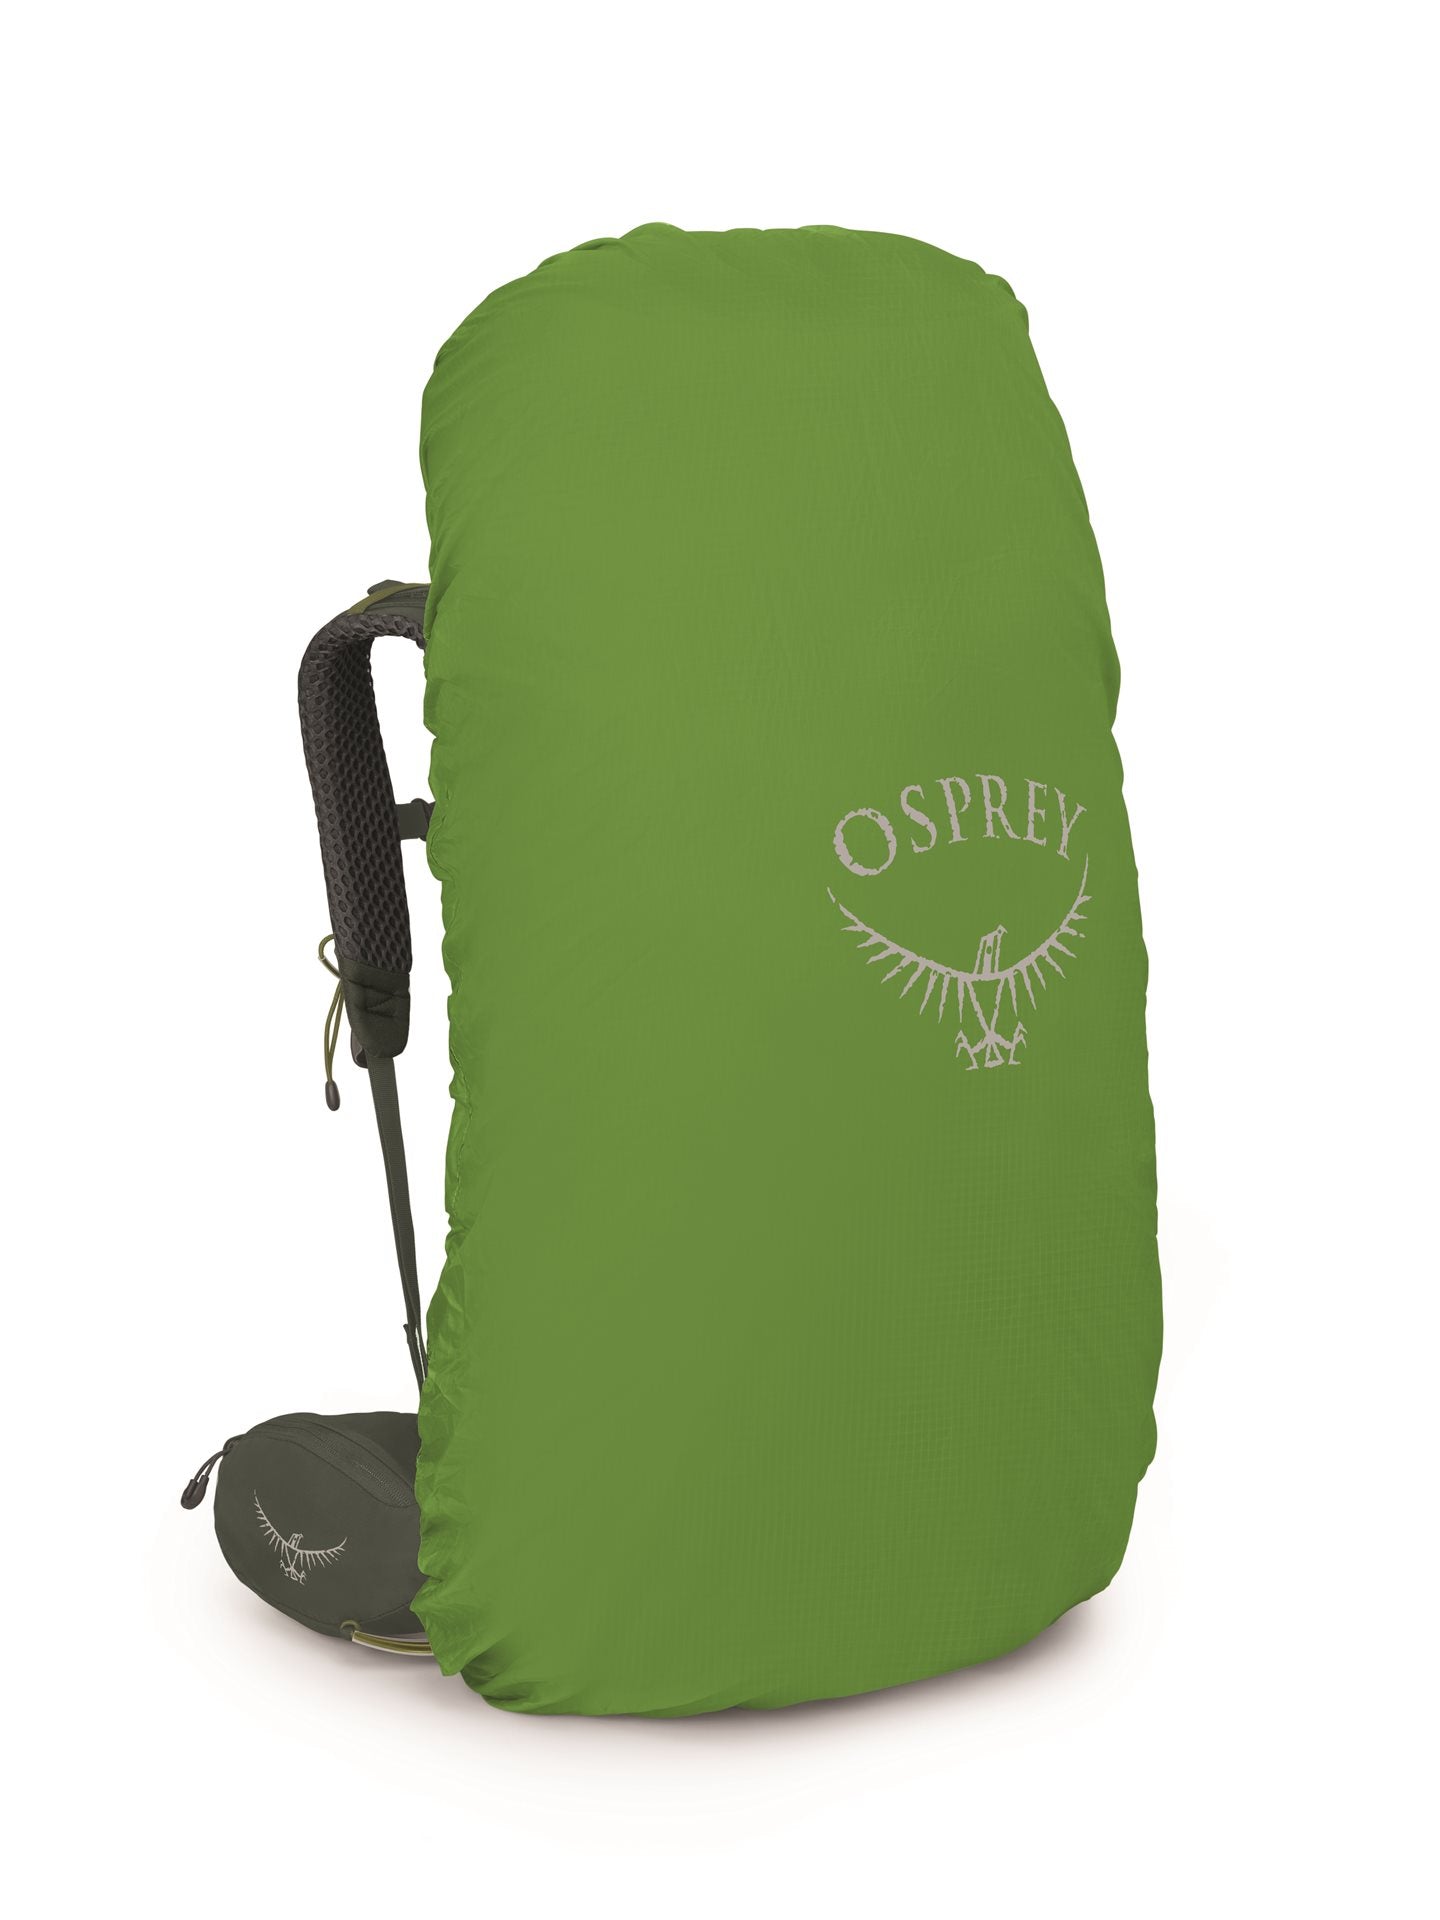 Osprey Kestrel Rugzak 58 Bonsai Green Backpack - Reisartikelen-nl